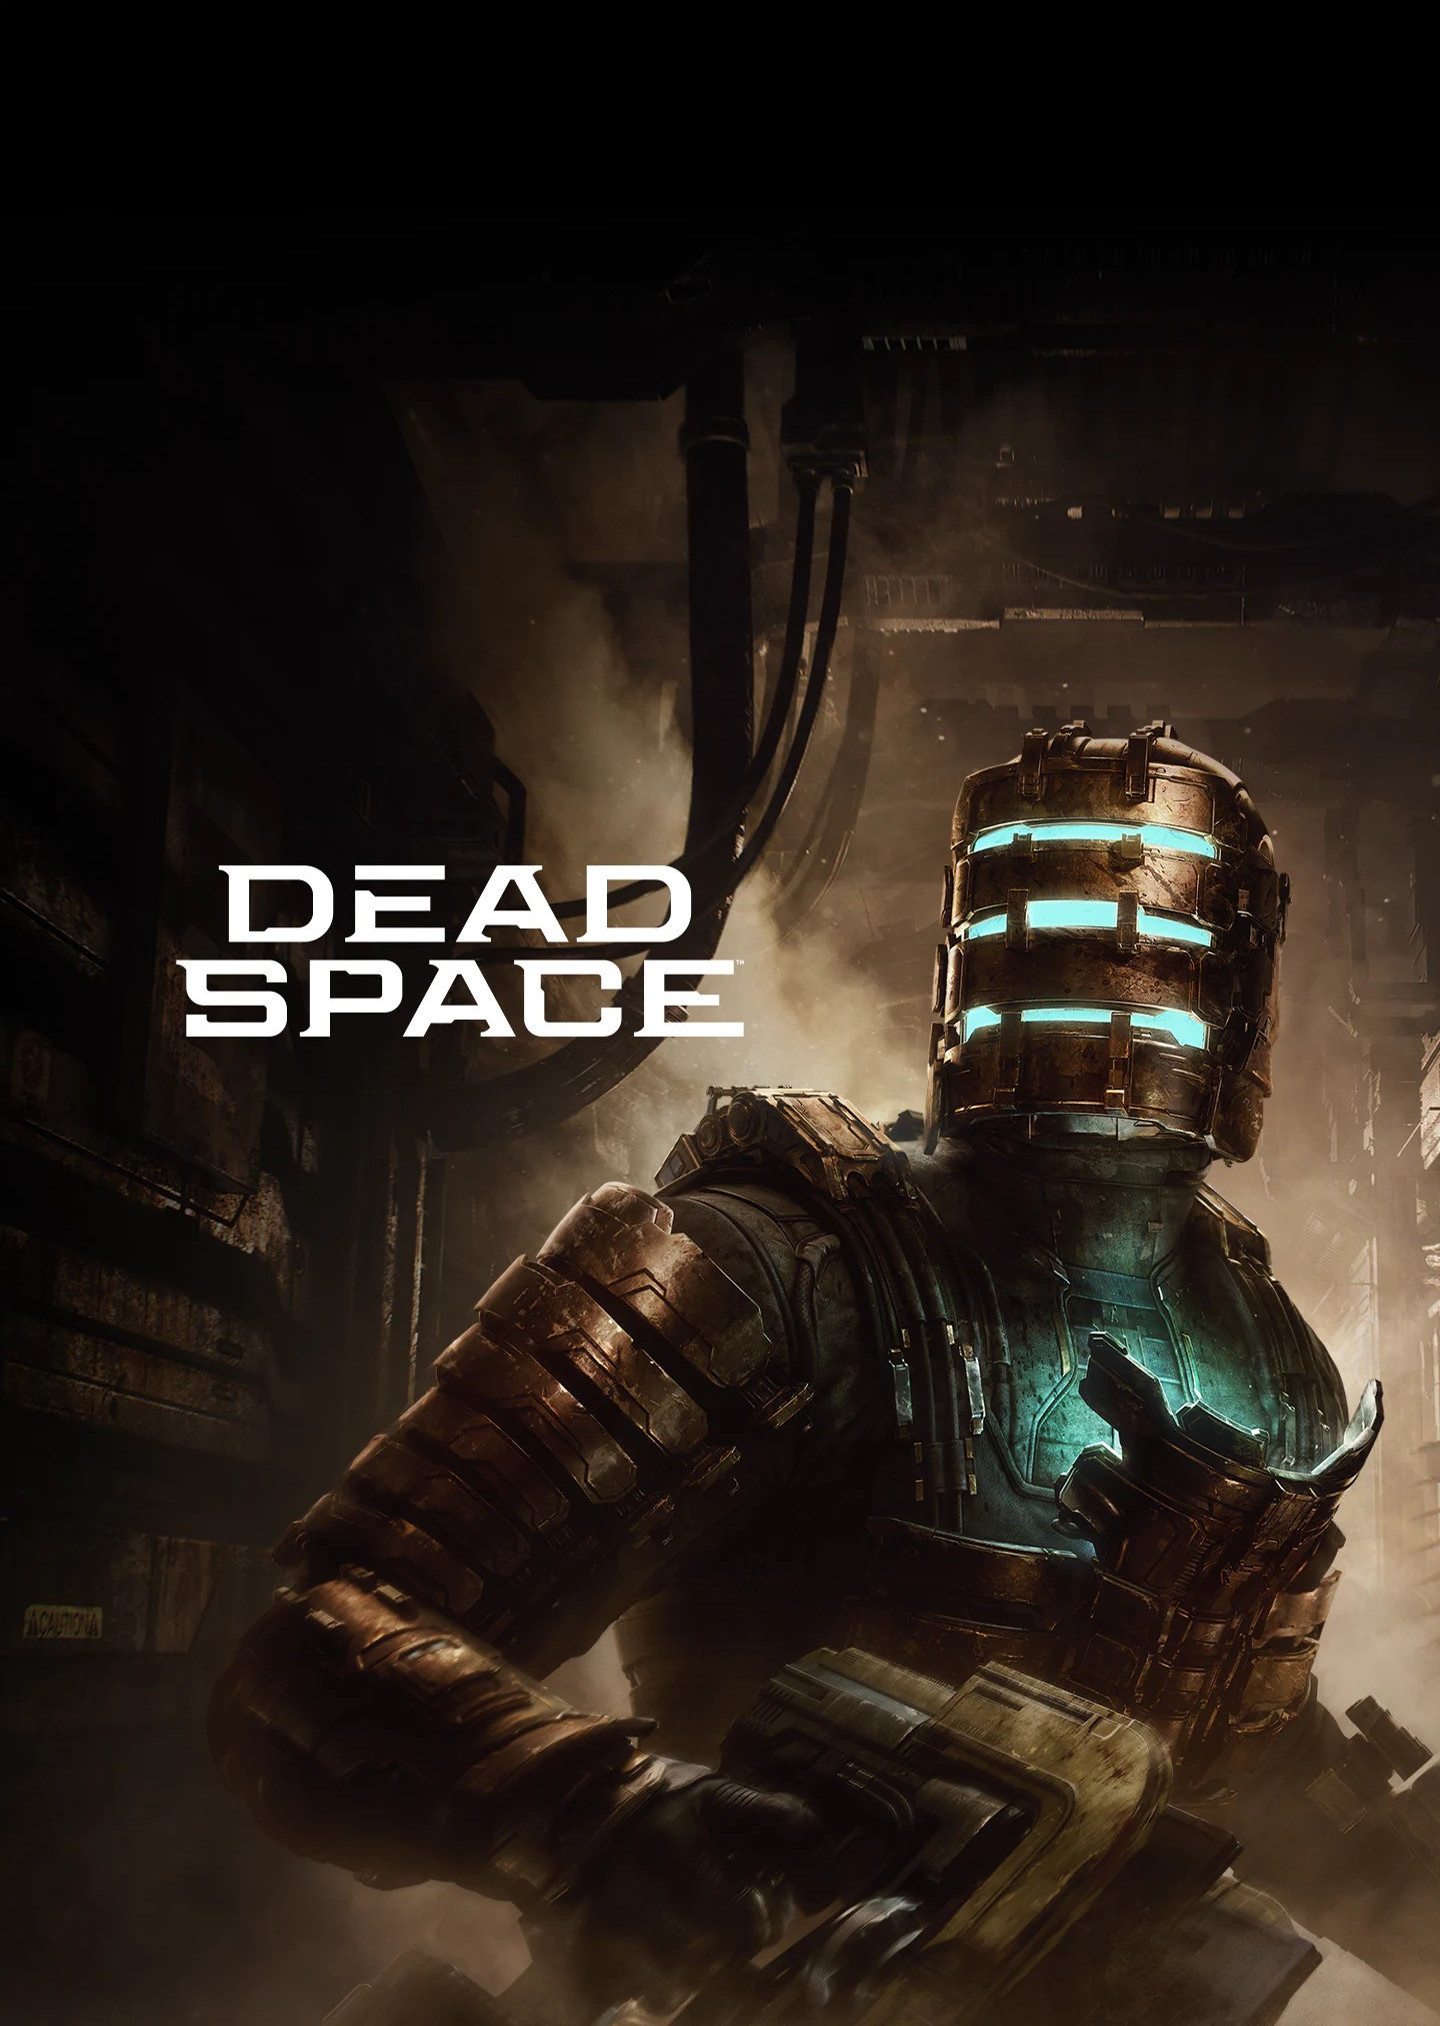 سی دی کی اریجینال بازی Dead Space Remake